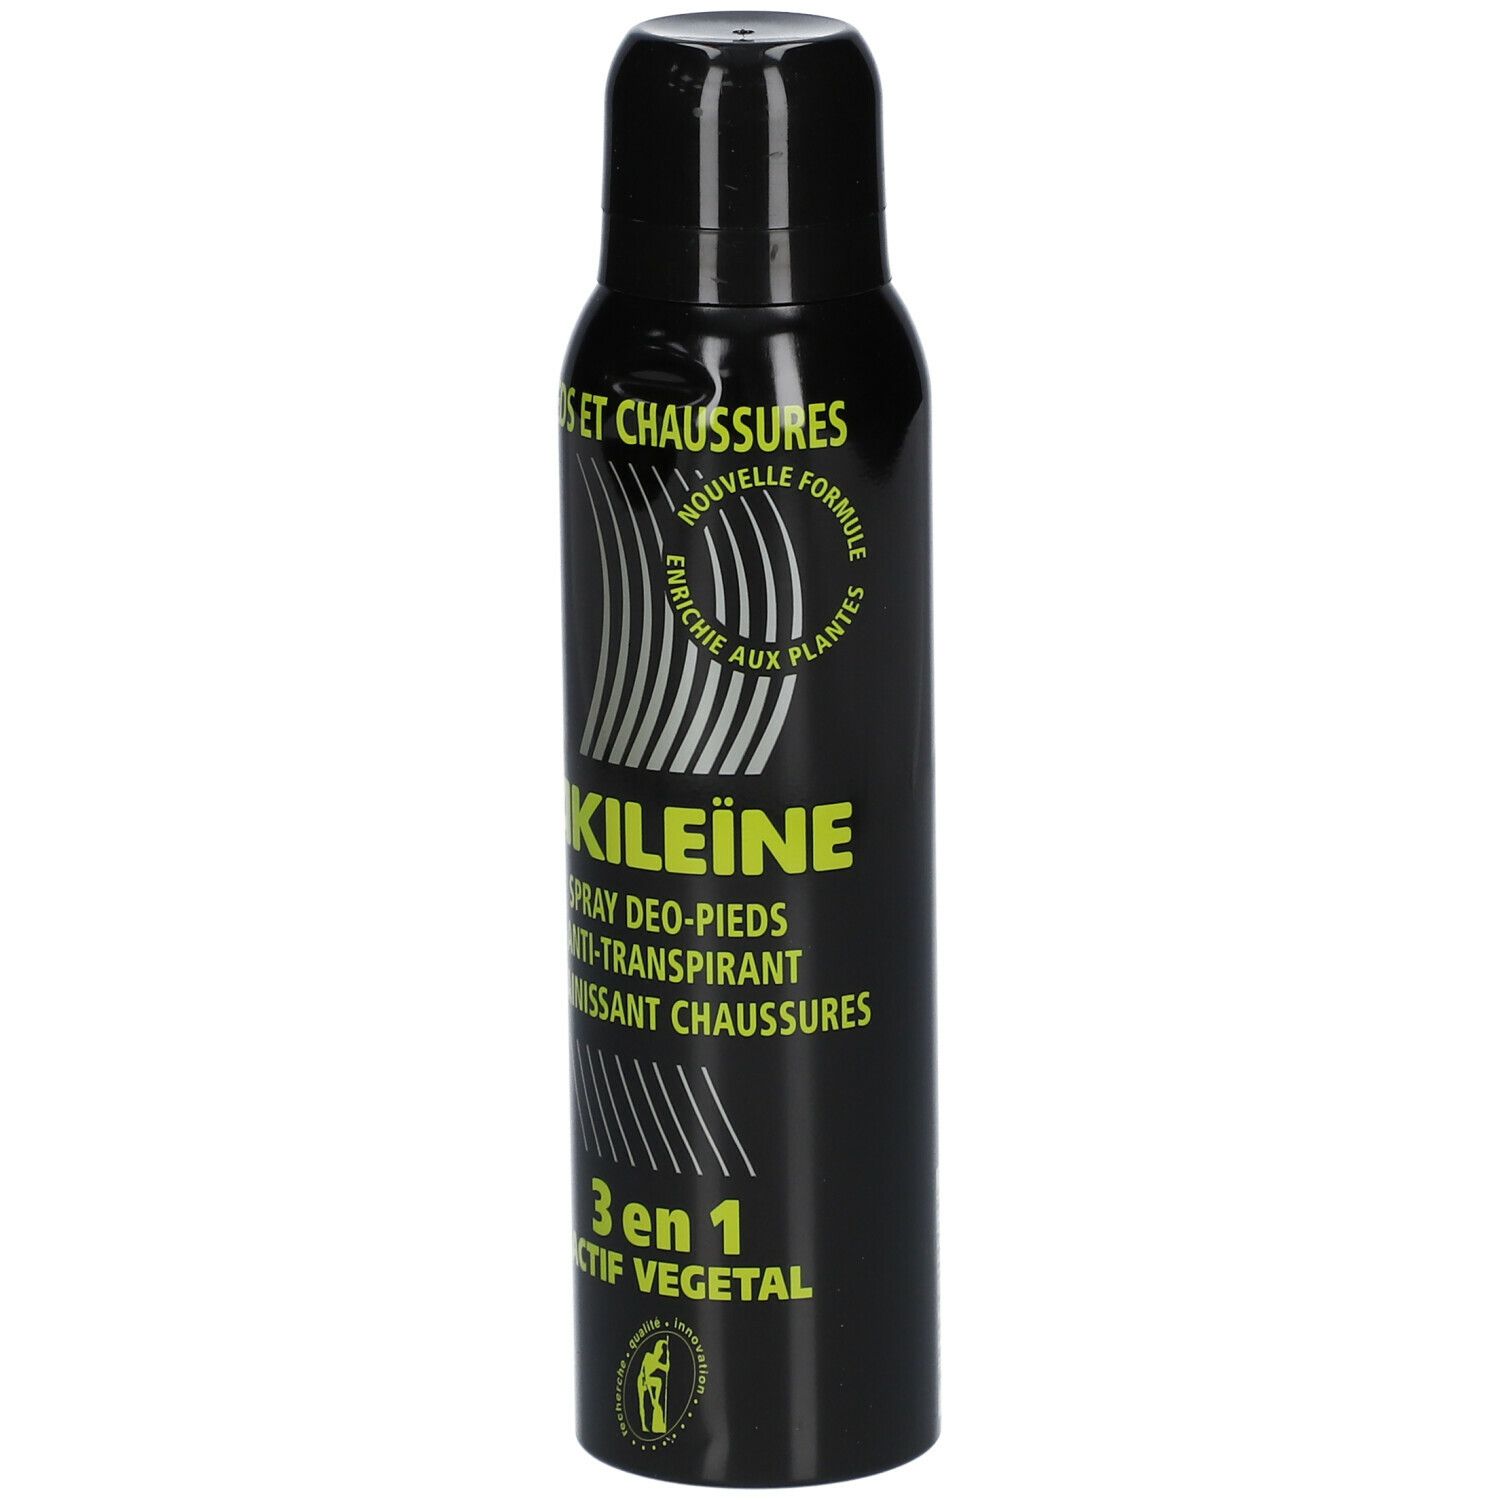 Akileine Spray Anti Transpirant Pieds et Chaussure 150ml